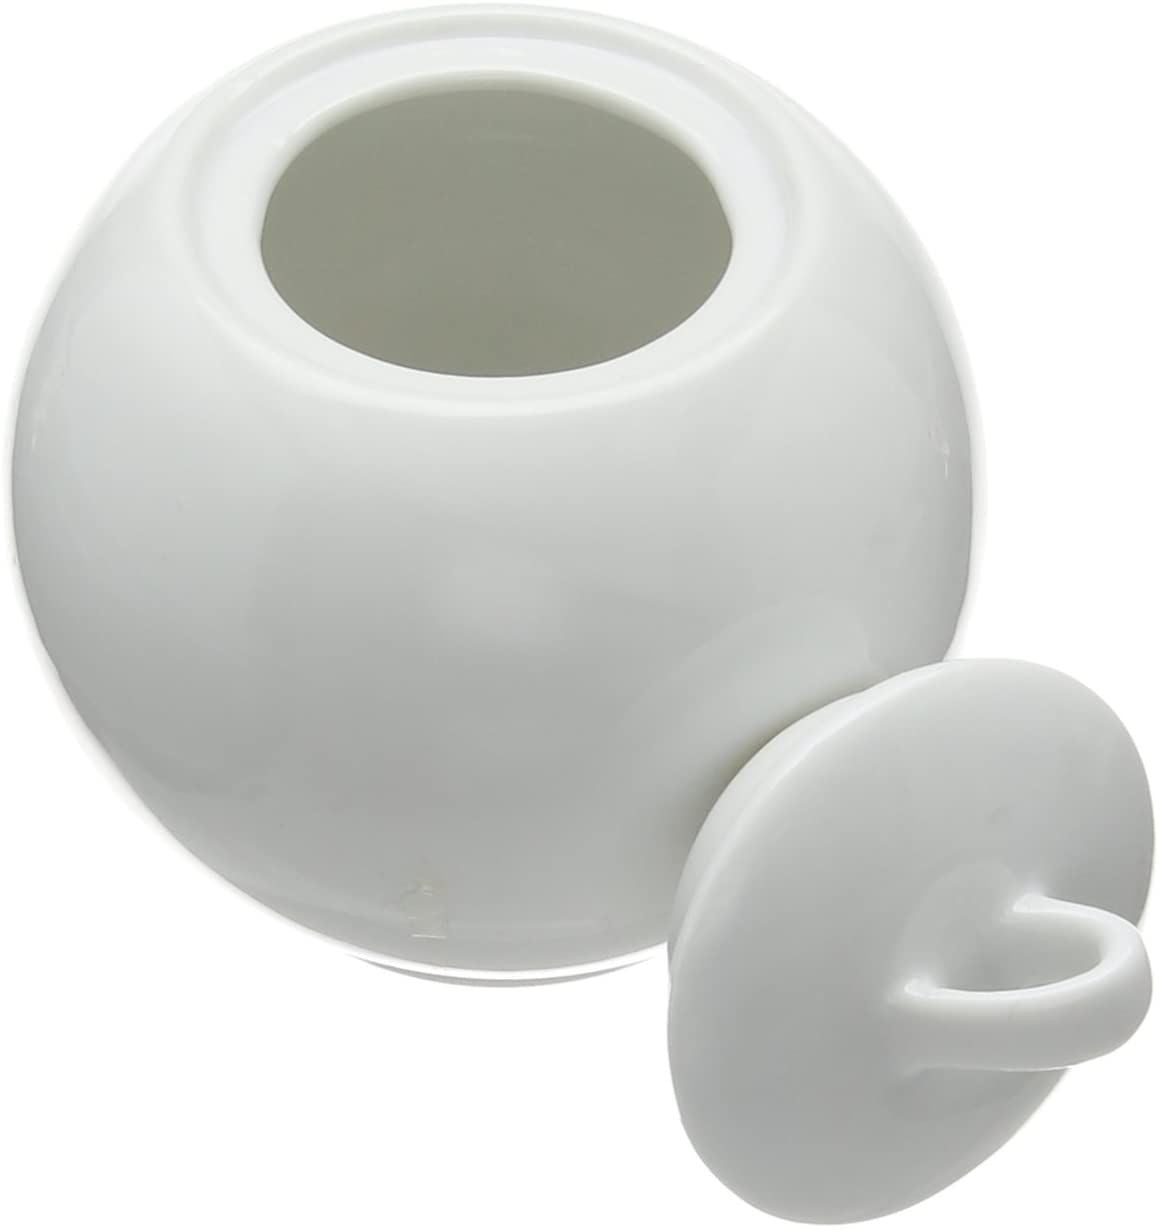 Kilner Price & Kensington Simplicity Sugar Bowl With Lid, Porcelain, White, 9.6 x 9.6 x 7.7 cm